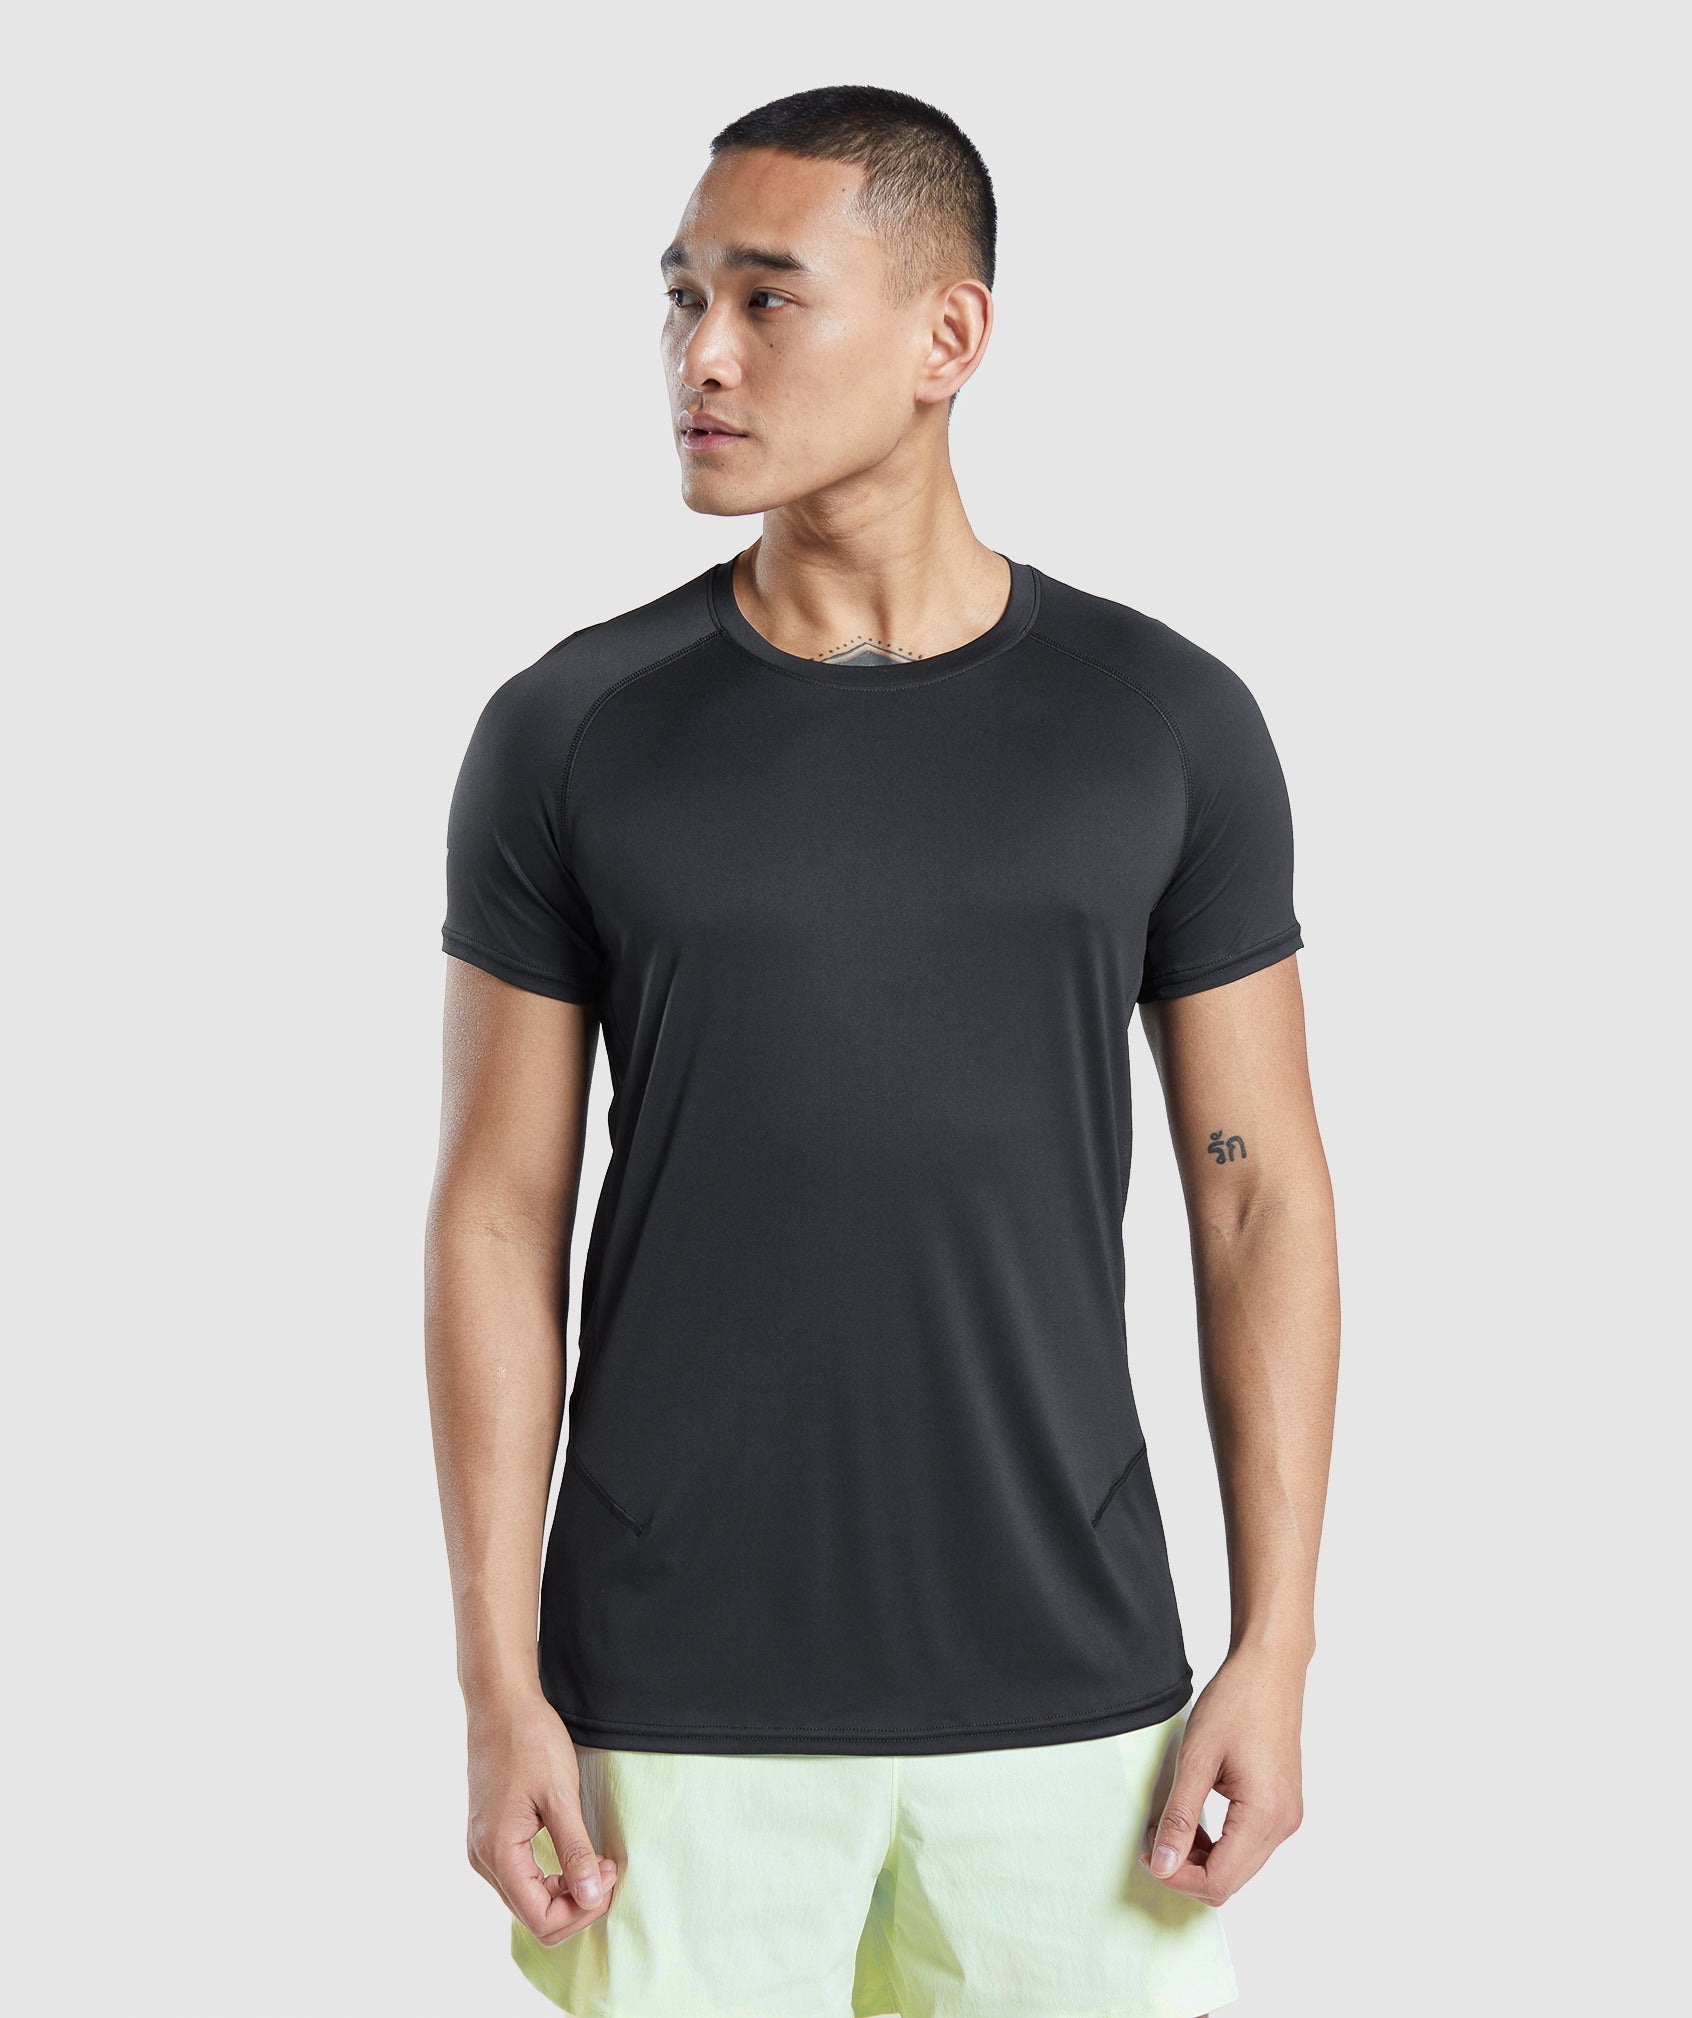 Gymshark Speed T-Shirt - Black